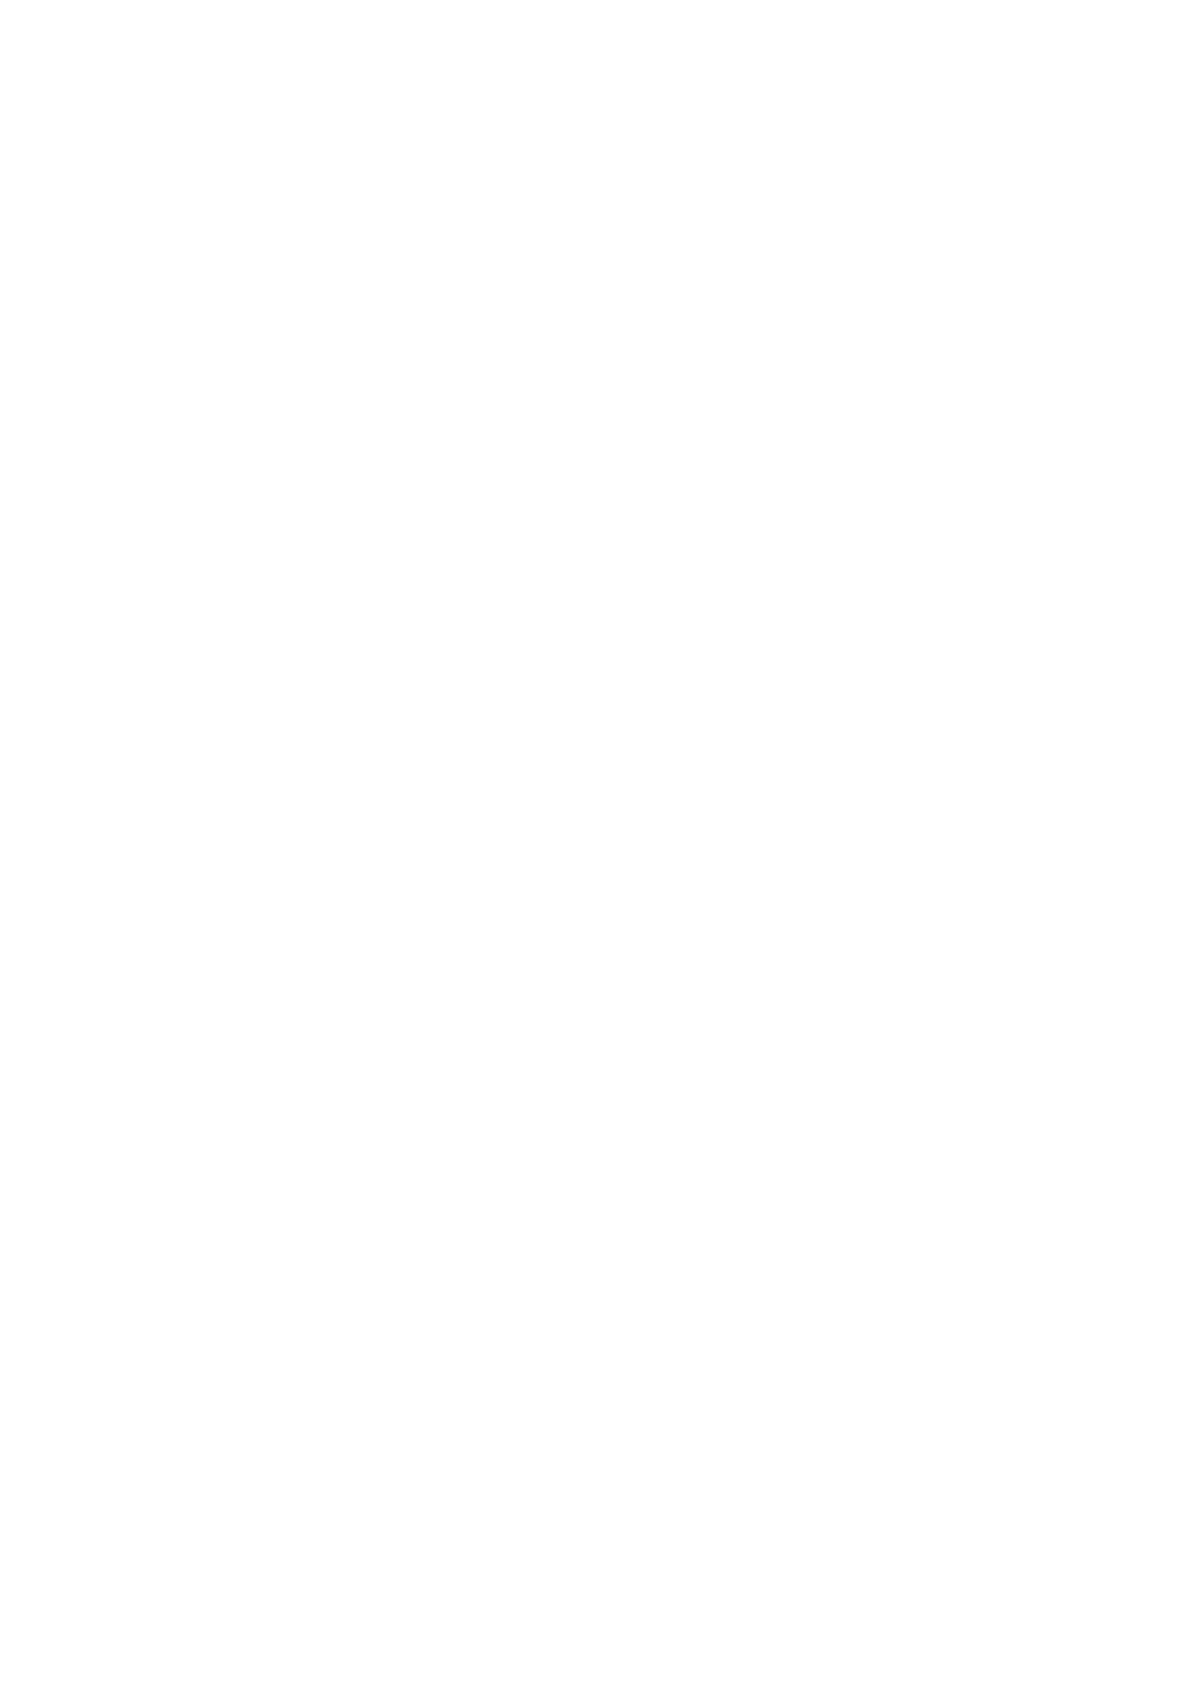 CIVES – Coordinamento Infermieri Volontari Emergenza Sanitaria